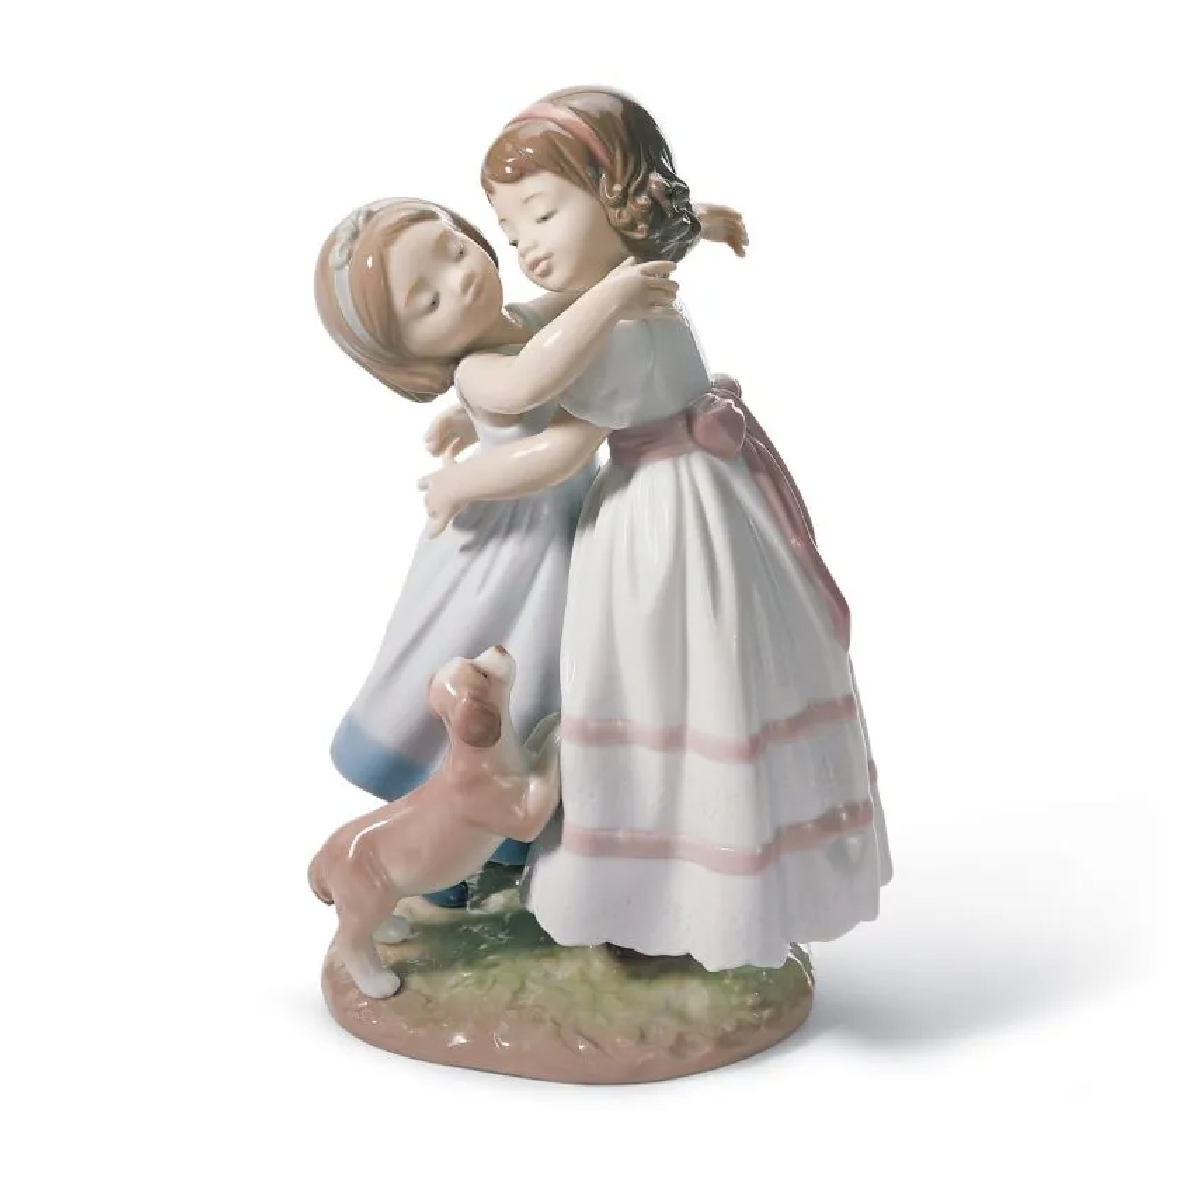 Lladro - Give Me a Hug! Children Figurine